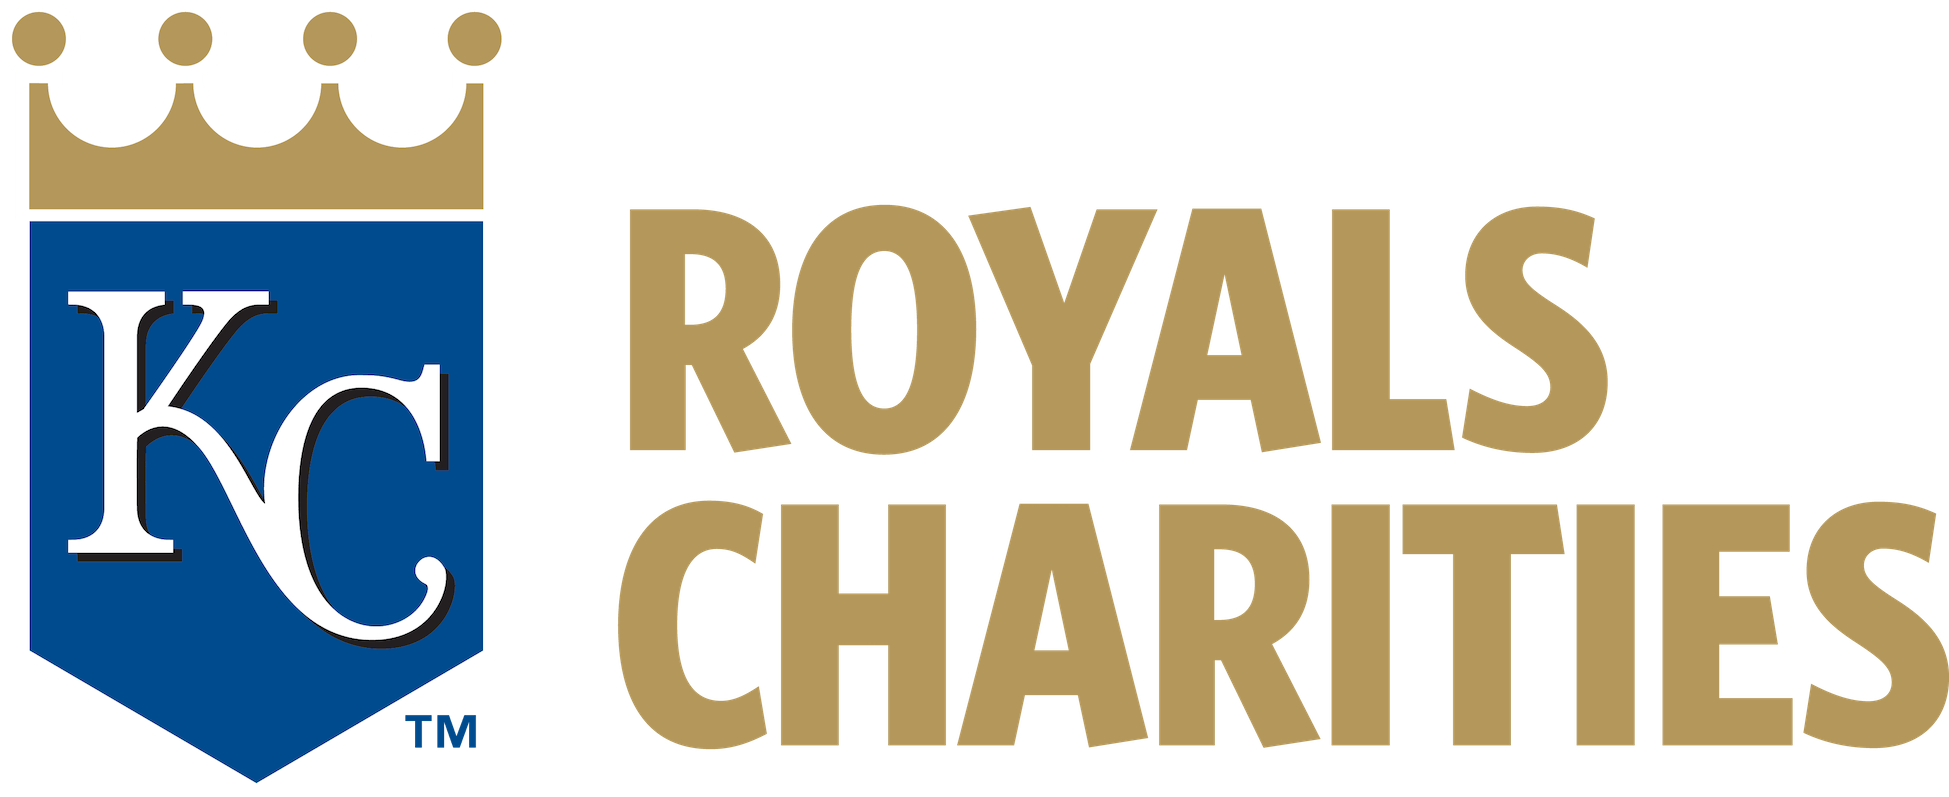 Kansas City Royals Logo - Kansas city royals crown logo graphic royalty free stock - RR ...